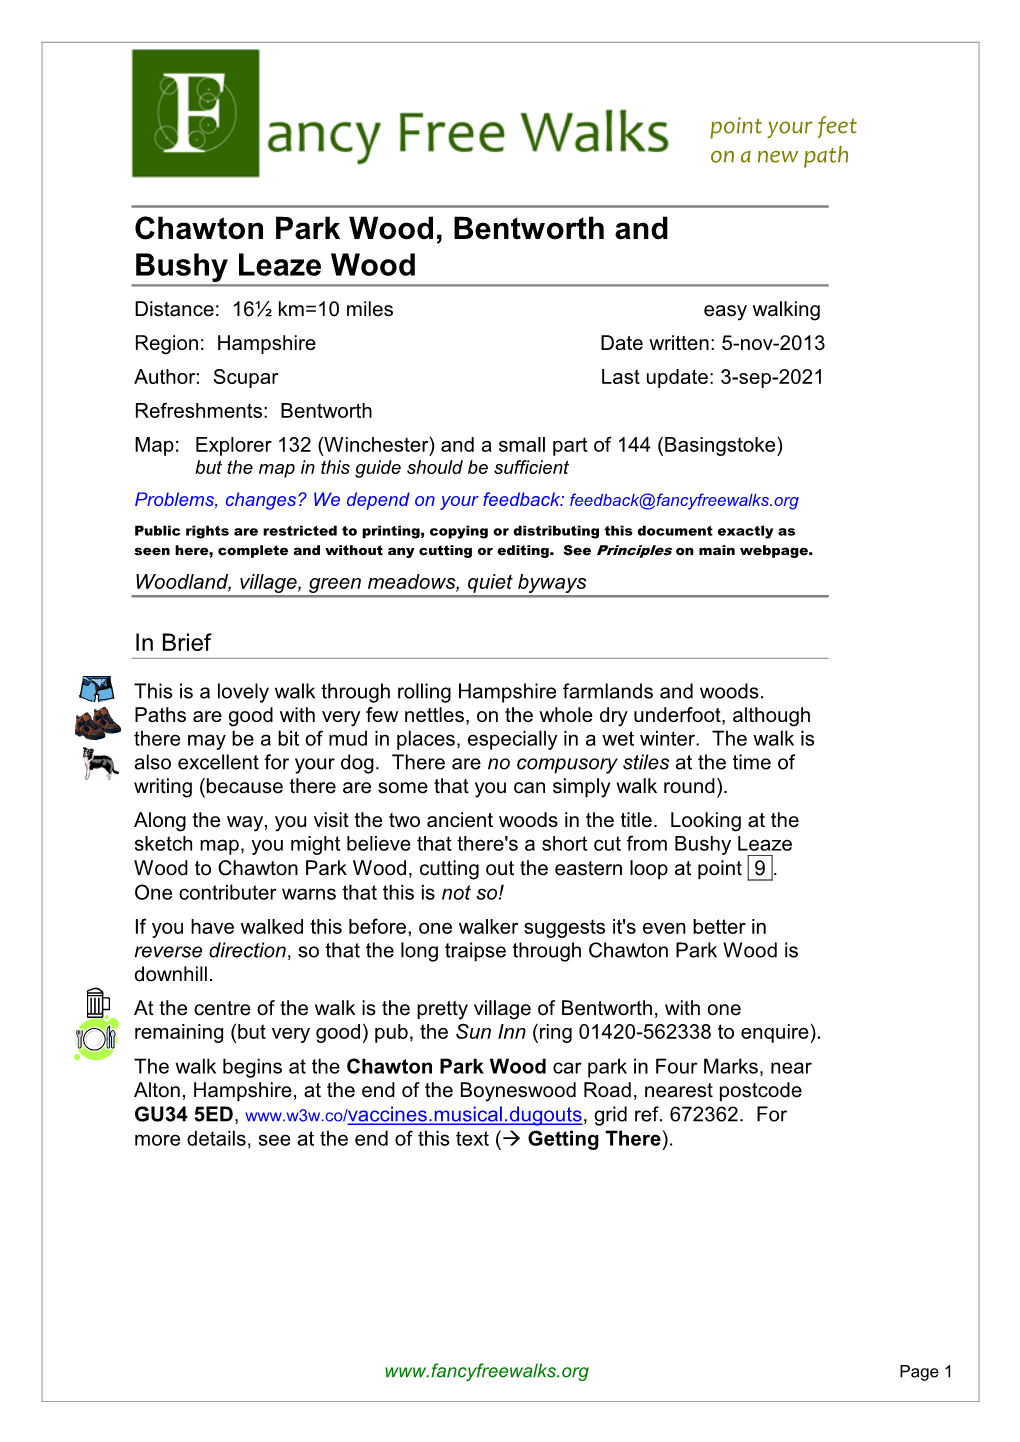 Chawton Park Wood, Bentworth & Bushy Leaze Wood